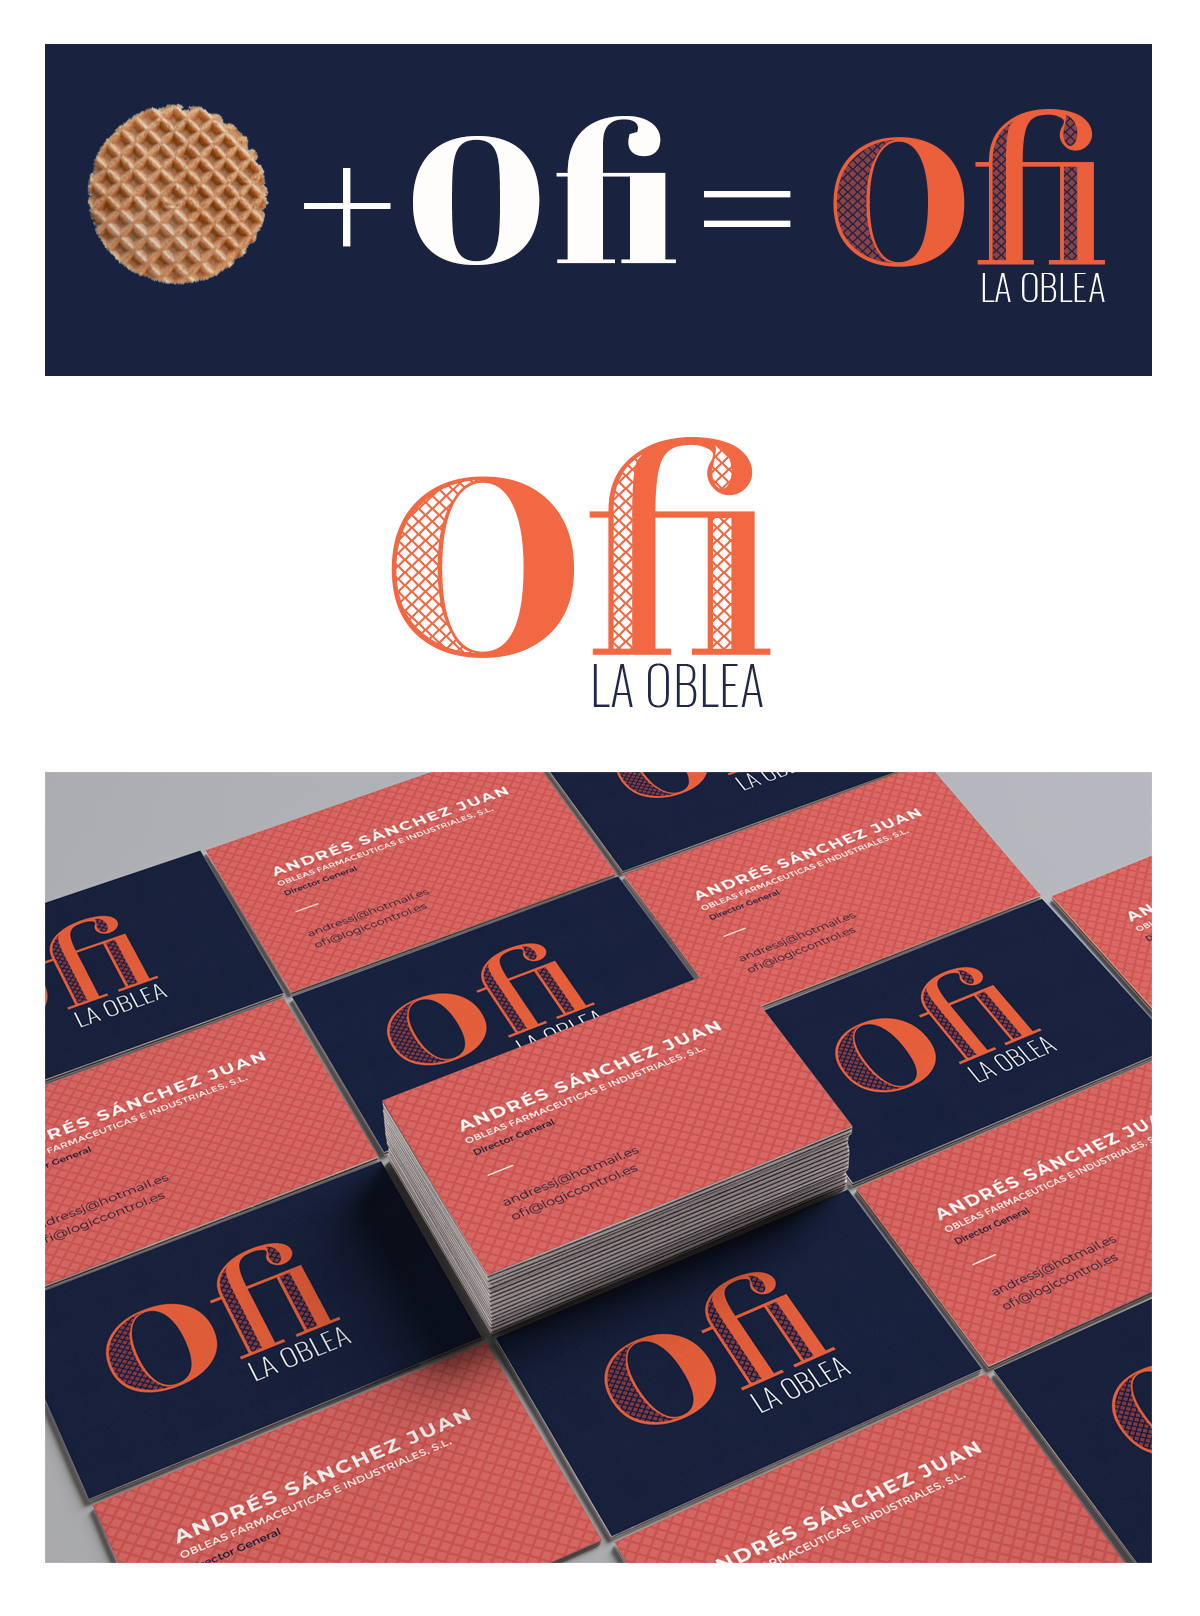 Identidad corporativa, logo y tarjetas OFI.